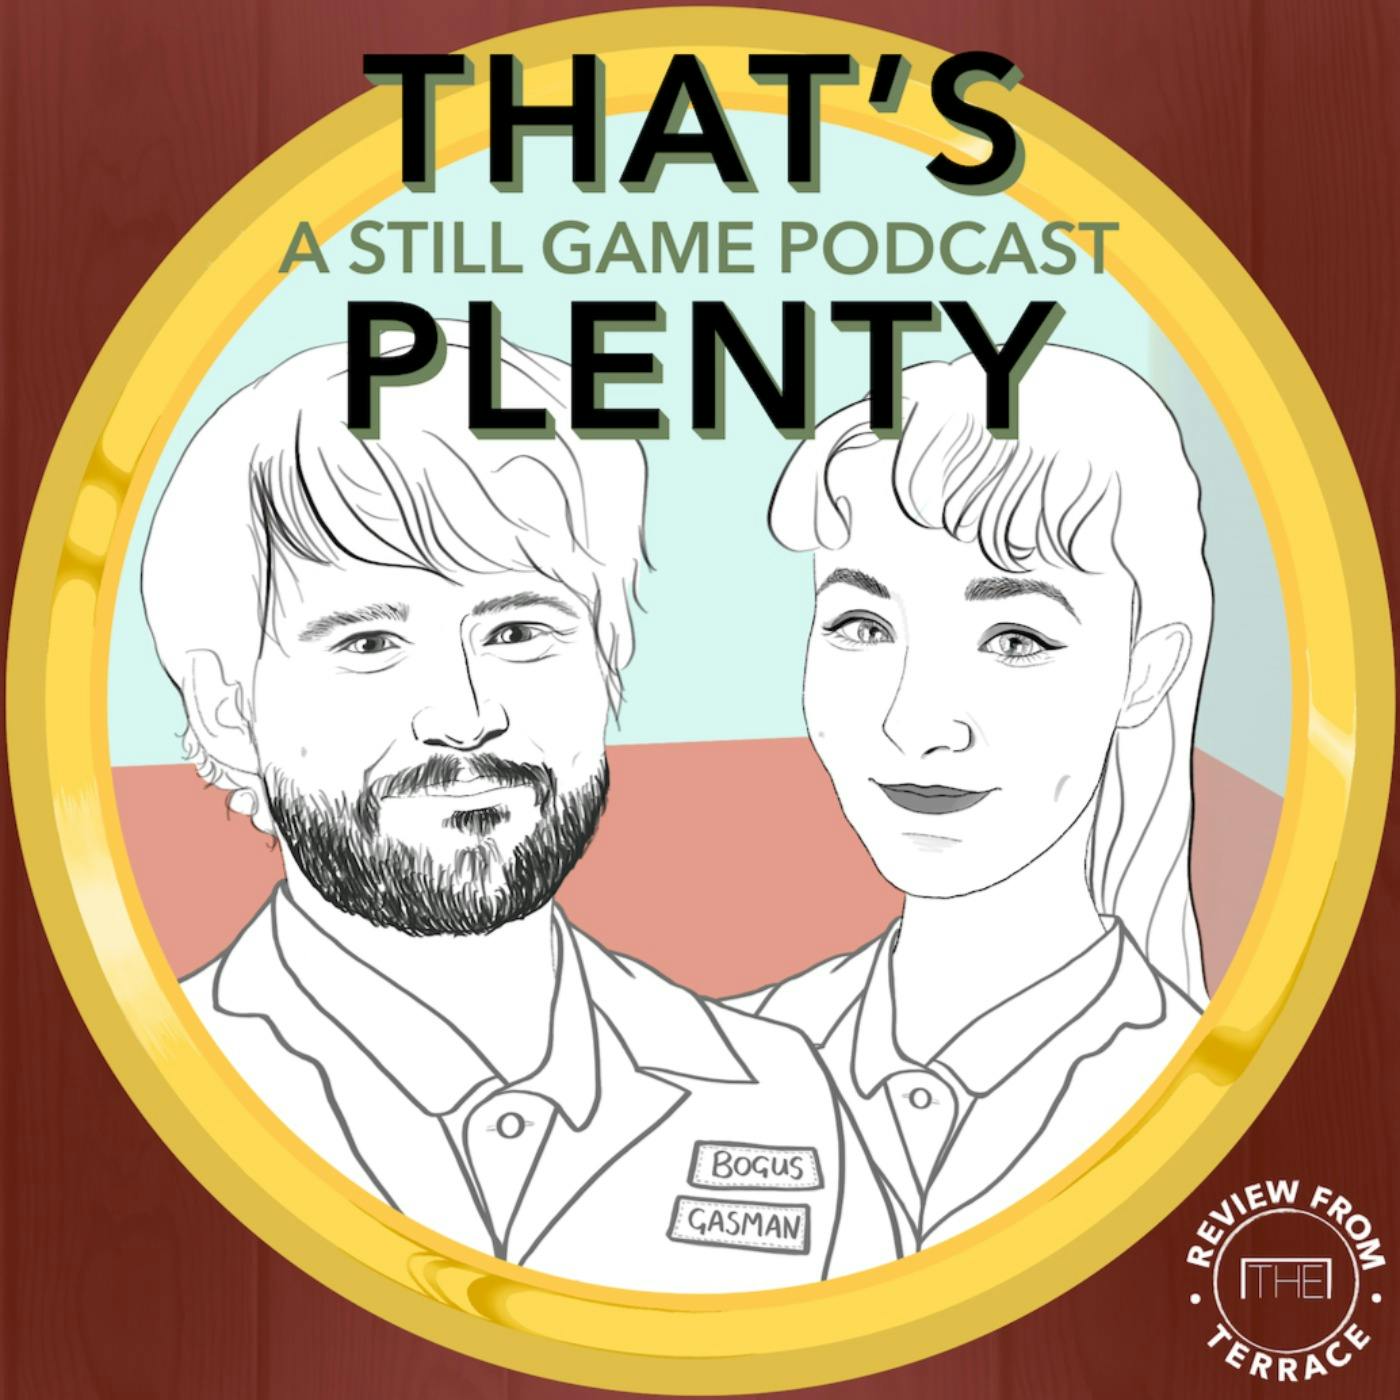 That's Plenty: A Still Game Podcast (episode 6: Scones)